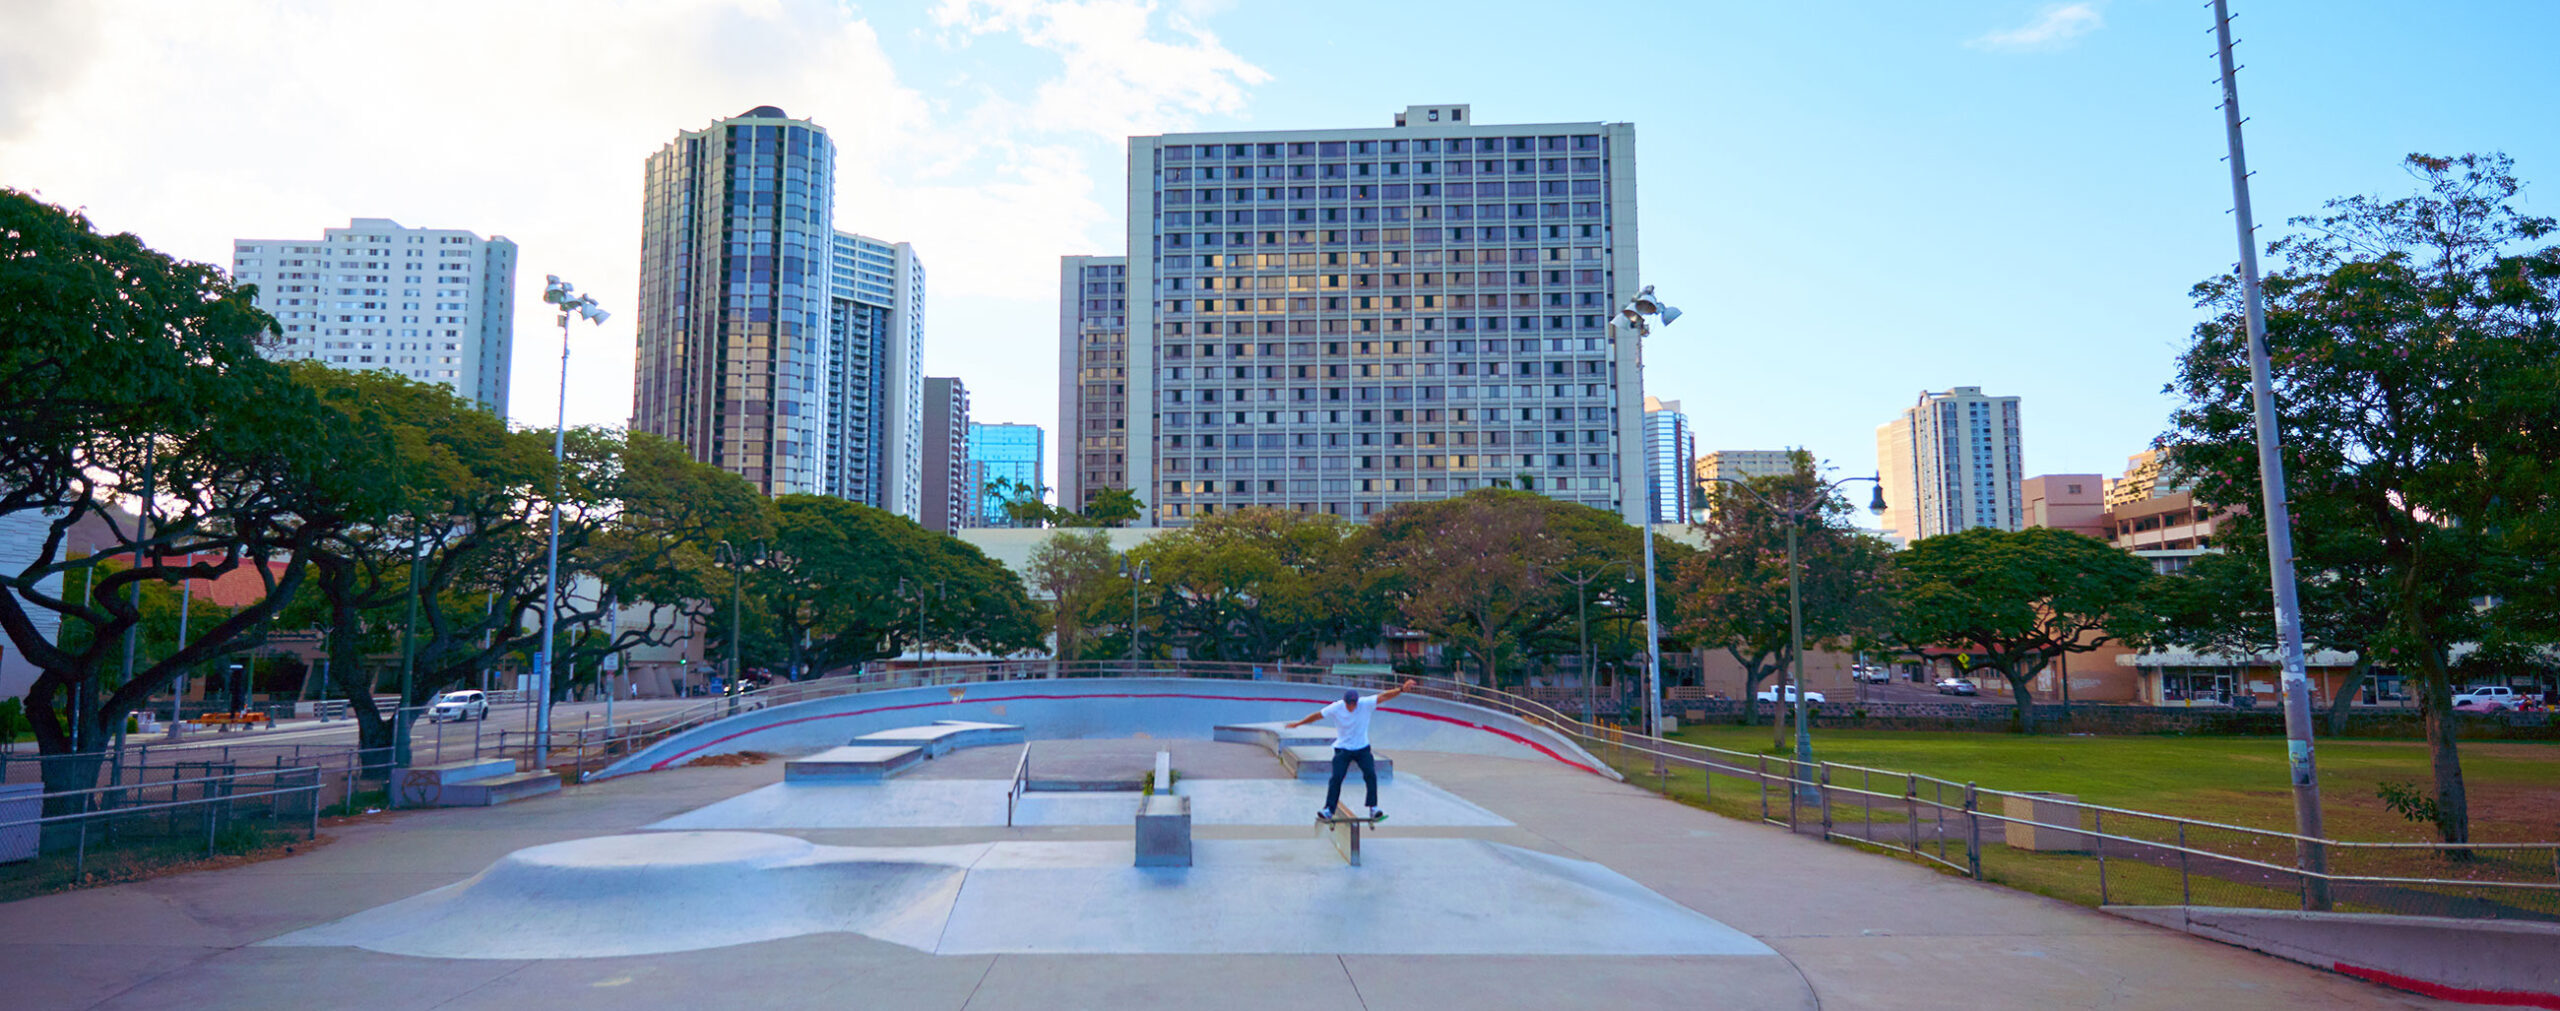 A skateboarder is riding a skateboard in a skate park.